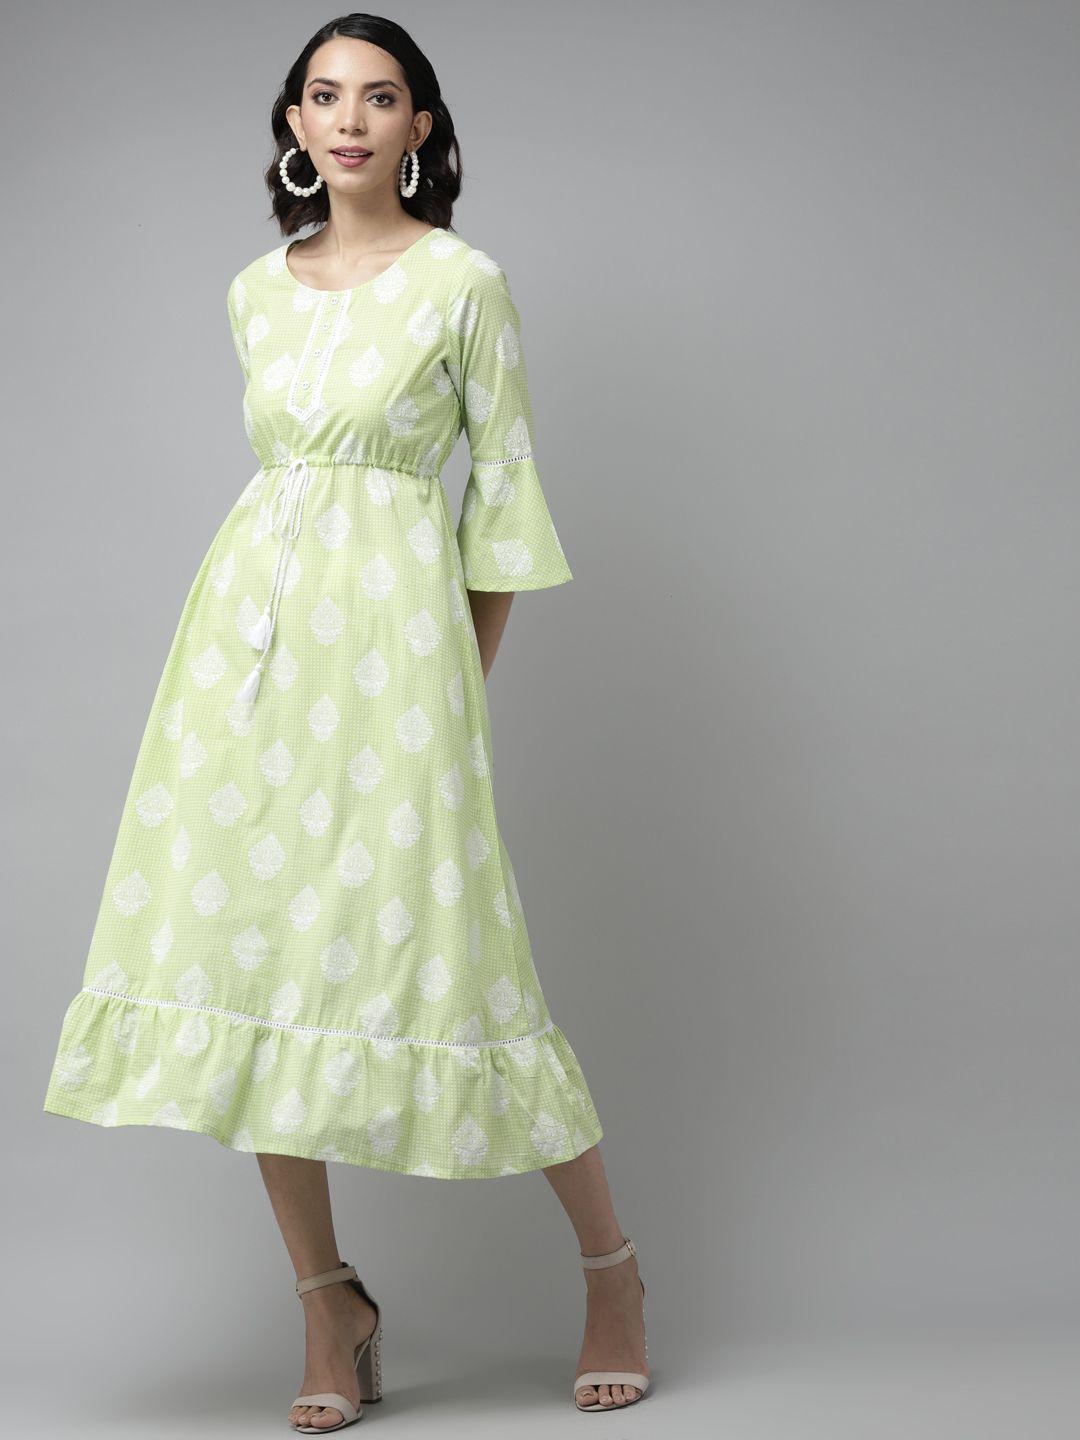 amirah s green & white ethnic motifs ethnic a-line midi dress